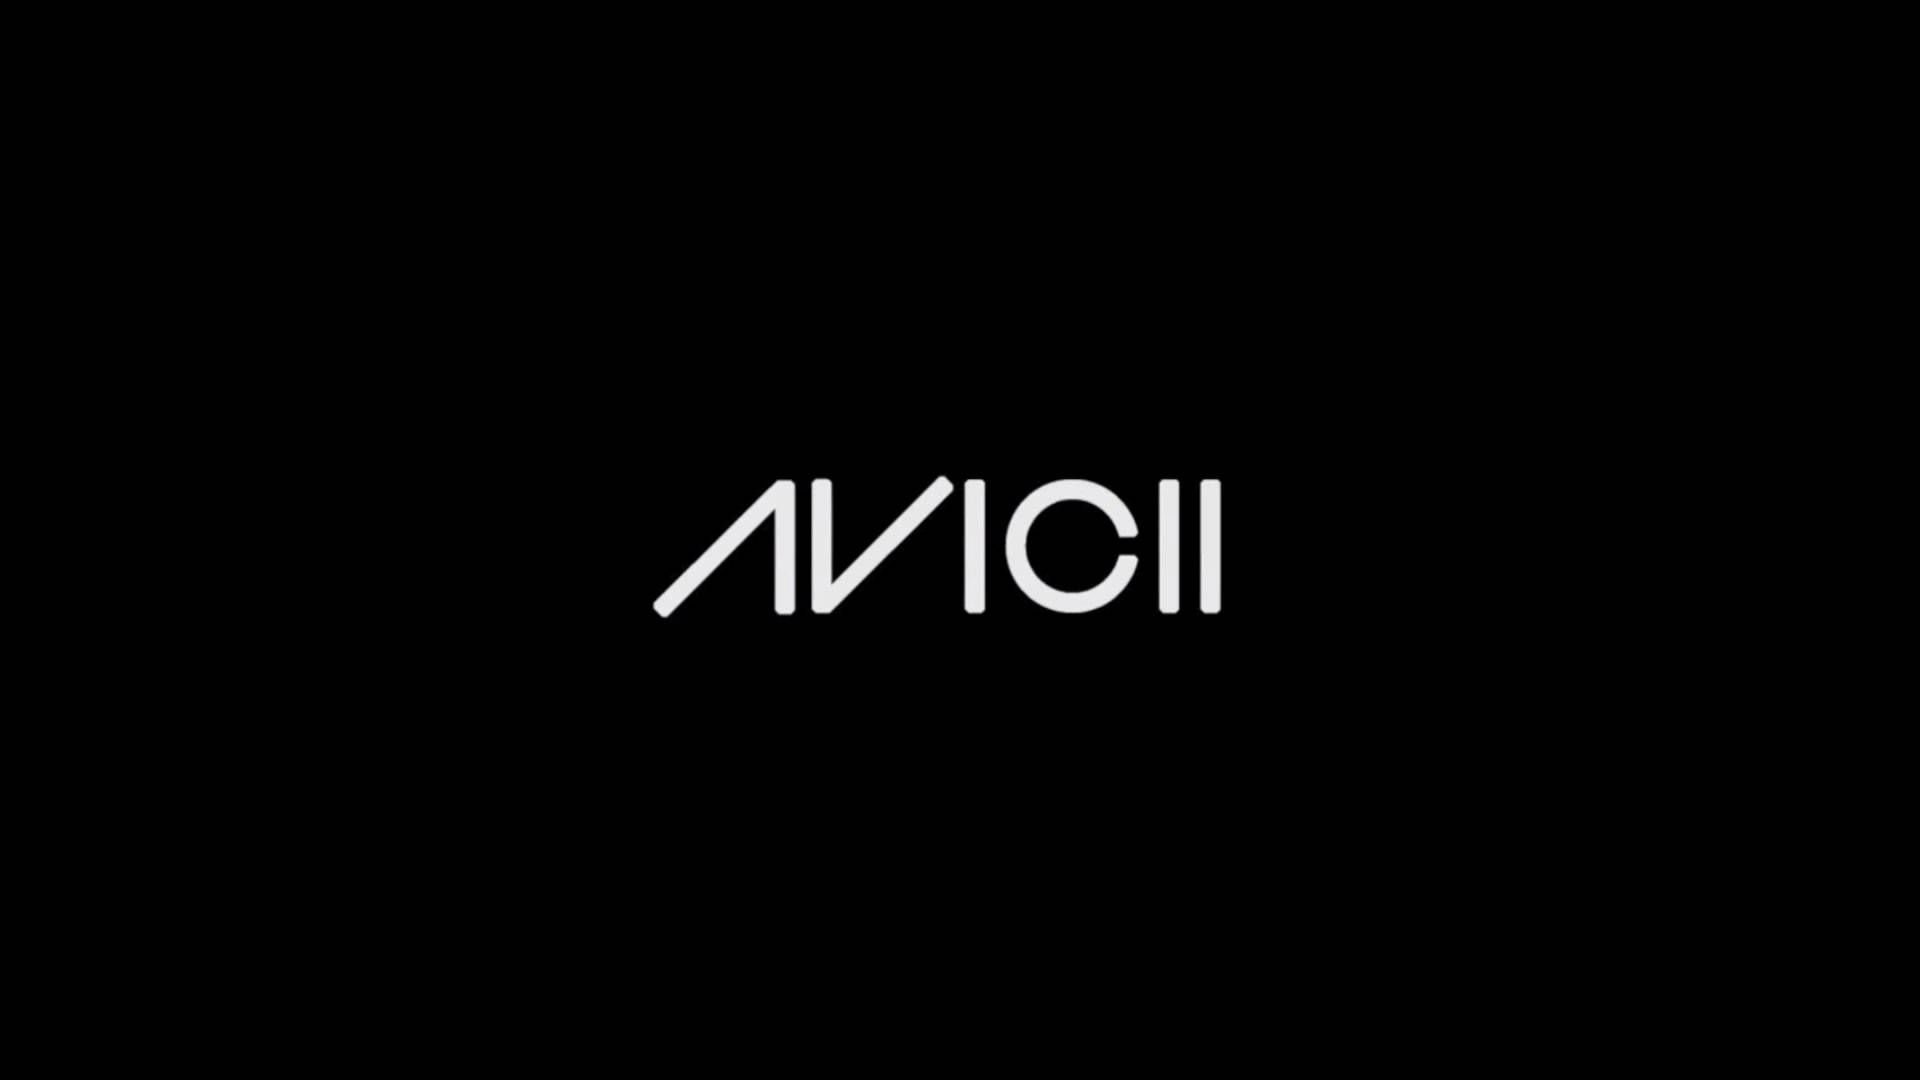  Avicii Hintergrundbild 1920x1080. Avicii Logo Wallpaper Free Avicii Logo Background